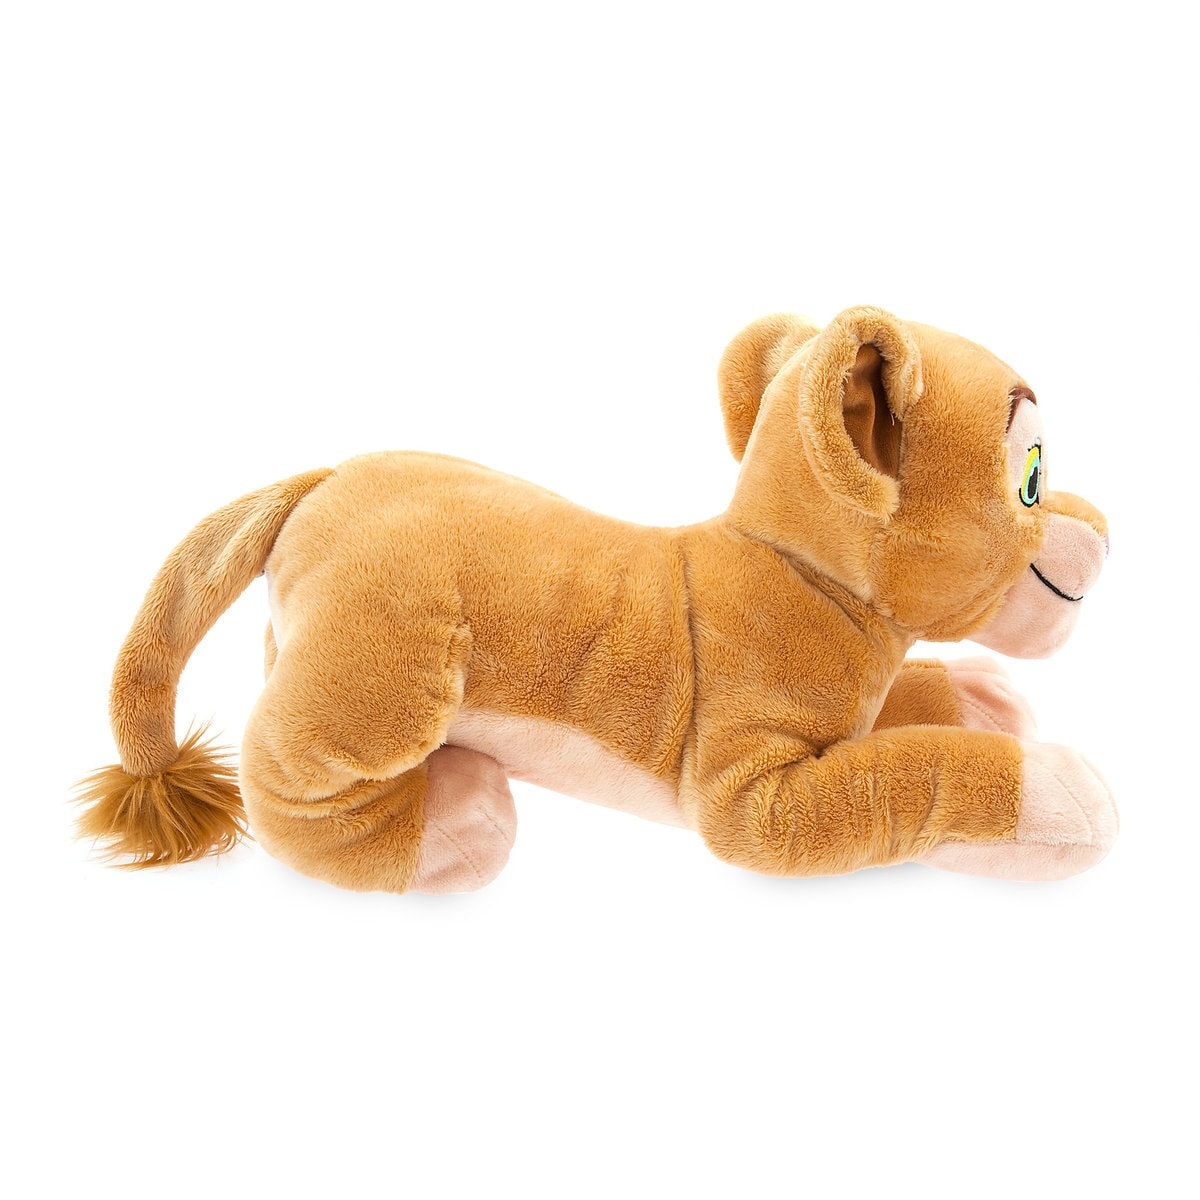 Disney Store Nala The Lion King Medium Plush New with Tags